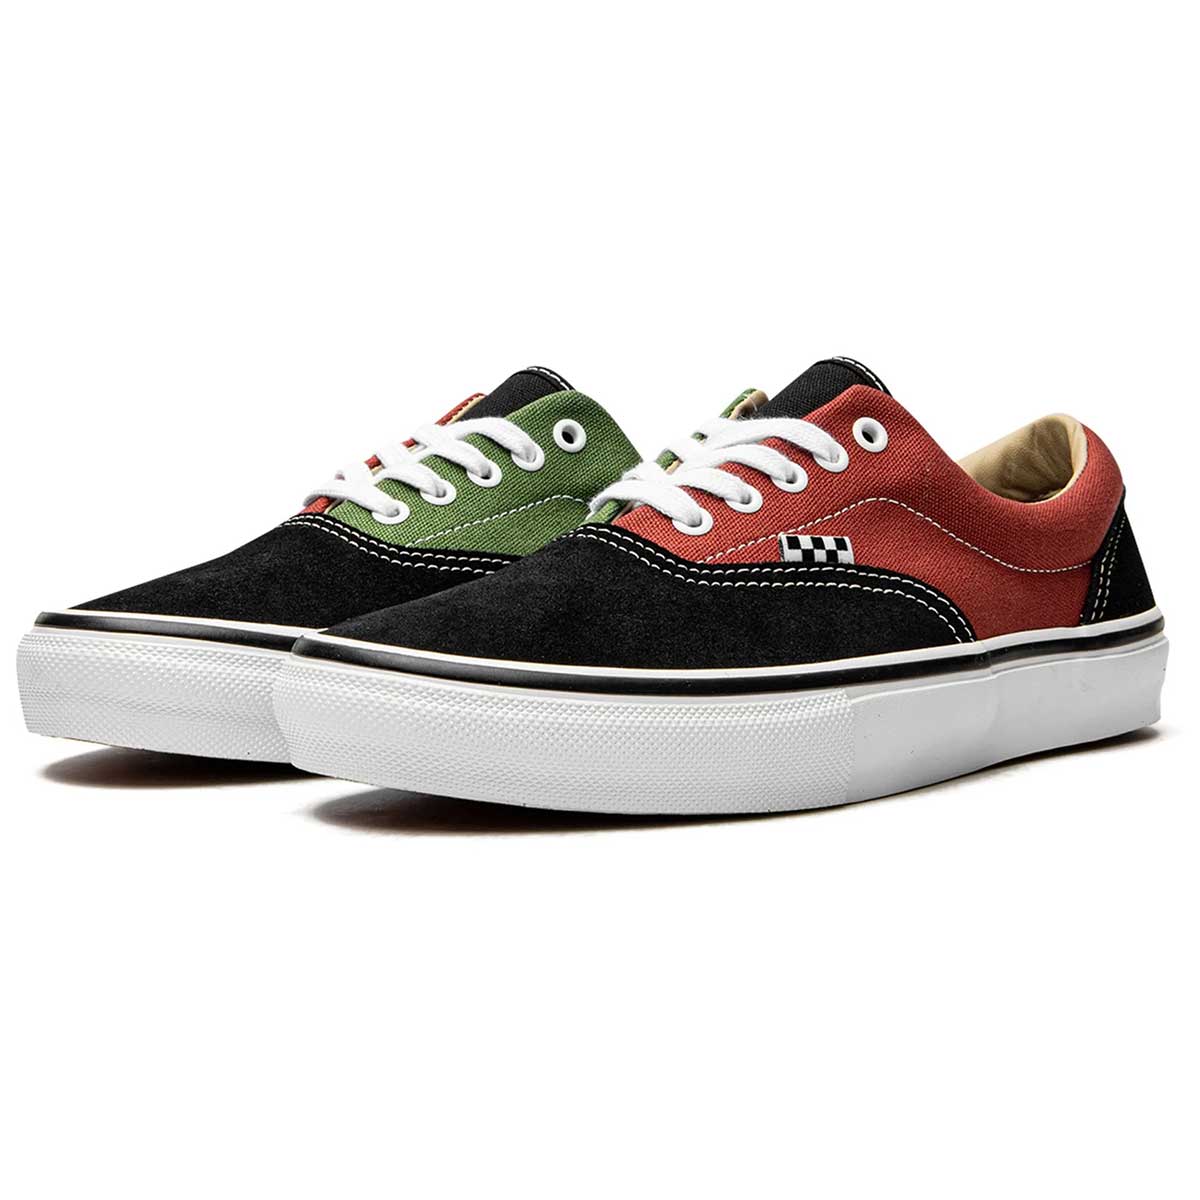 (University)Red/Green Vans Skate Era shoes Pair